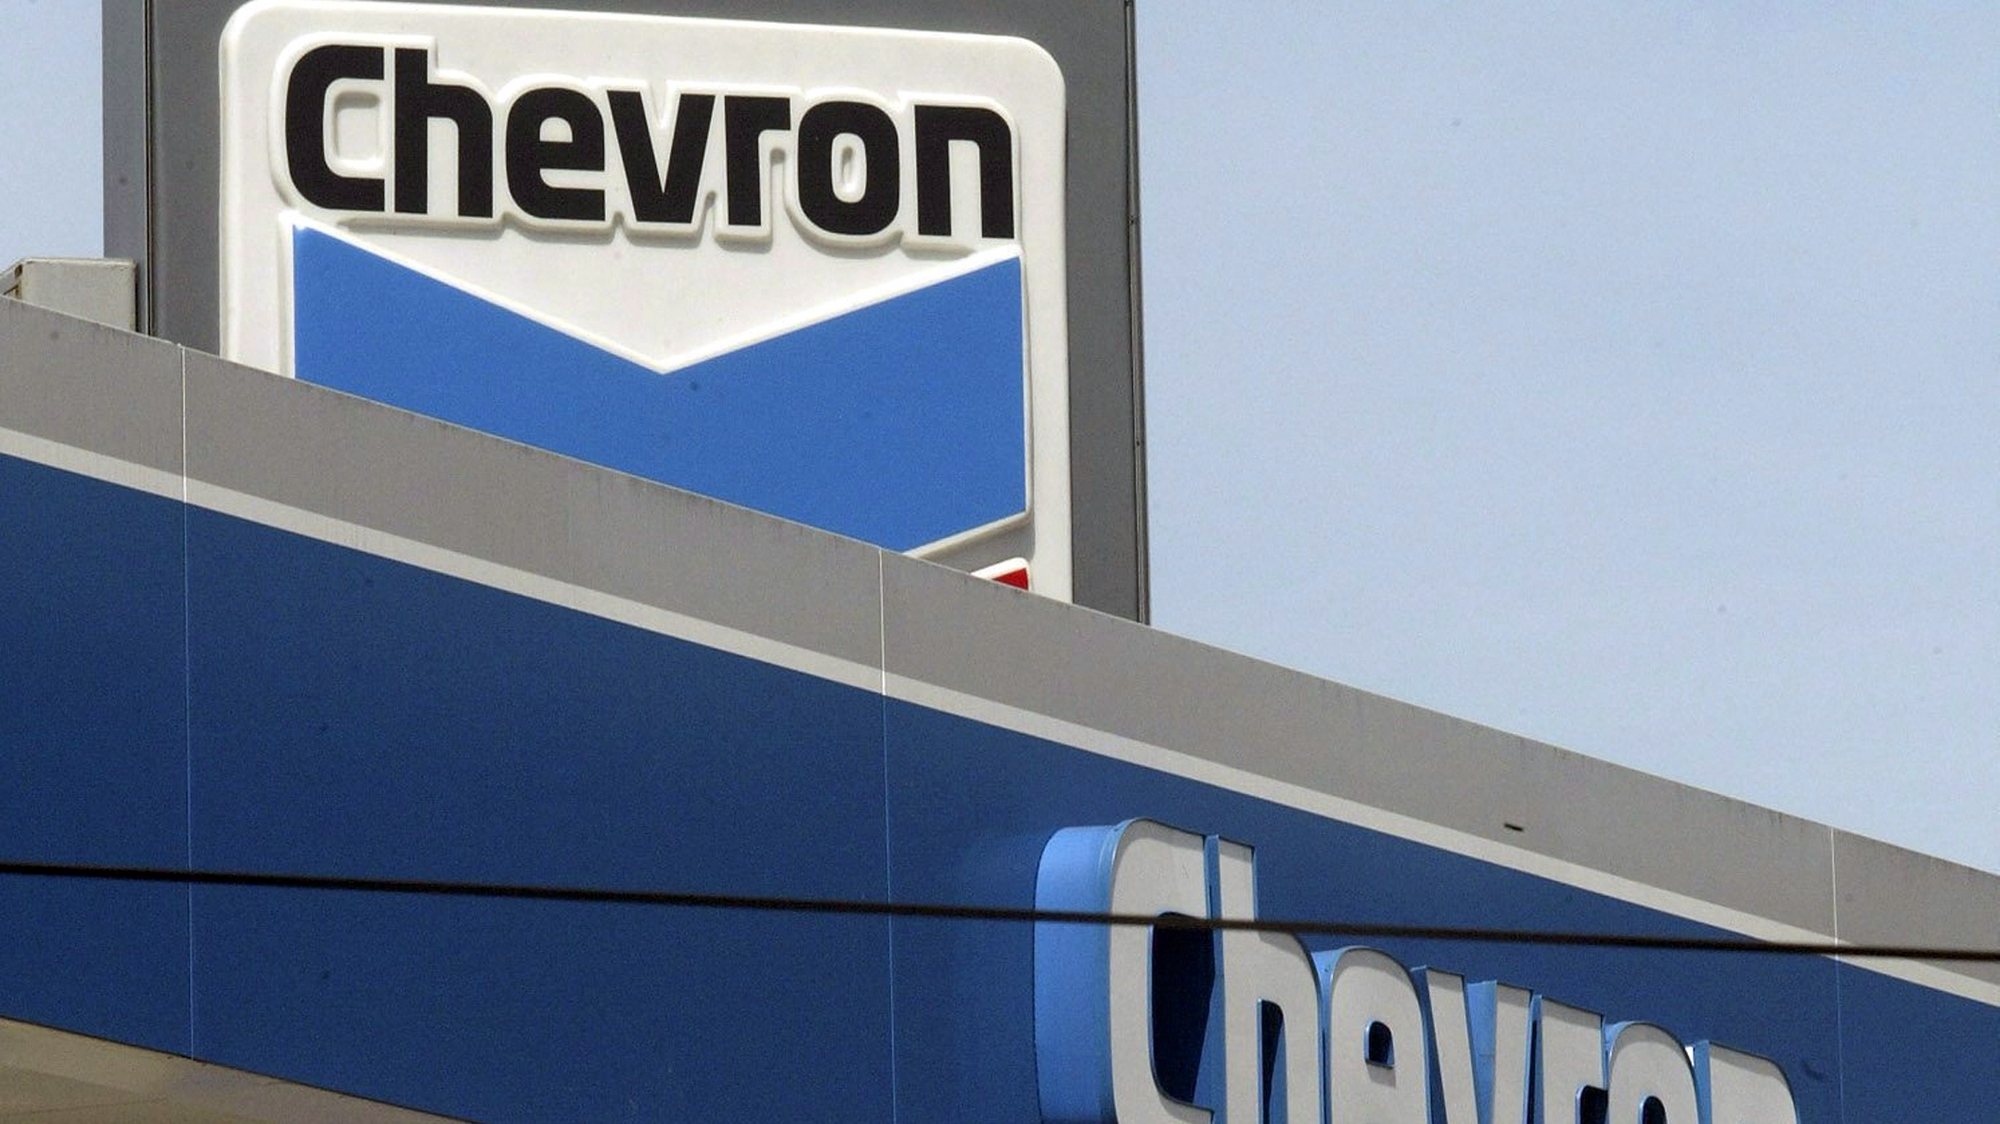 Chevron - petrolífera norte-americana - logotipo